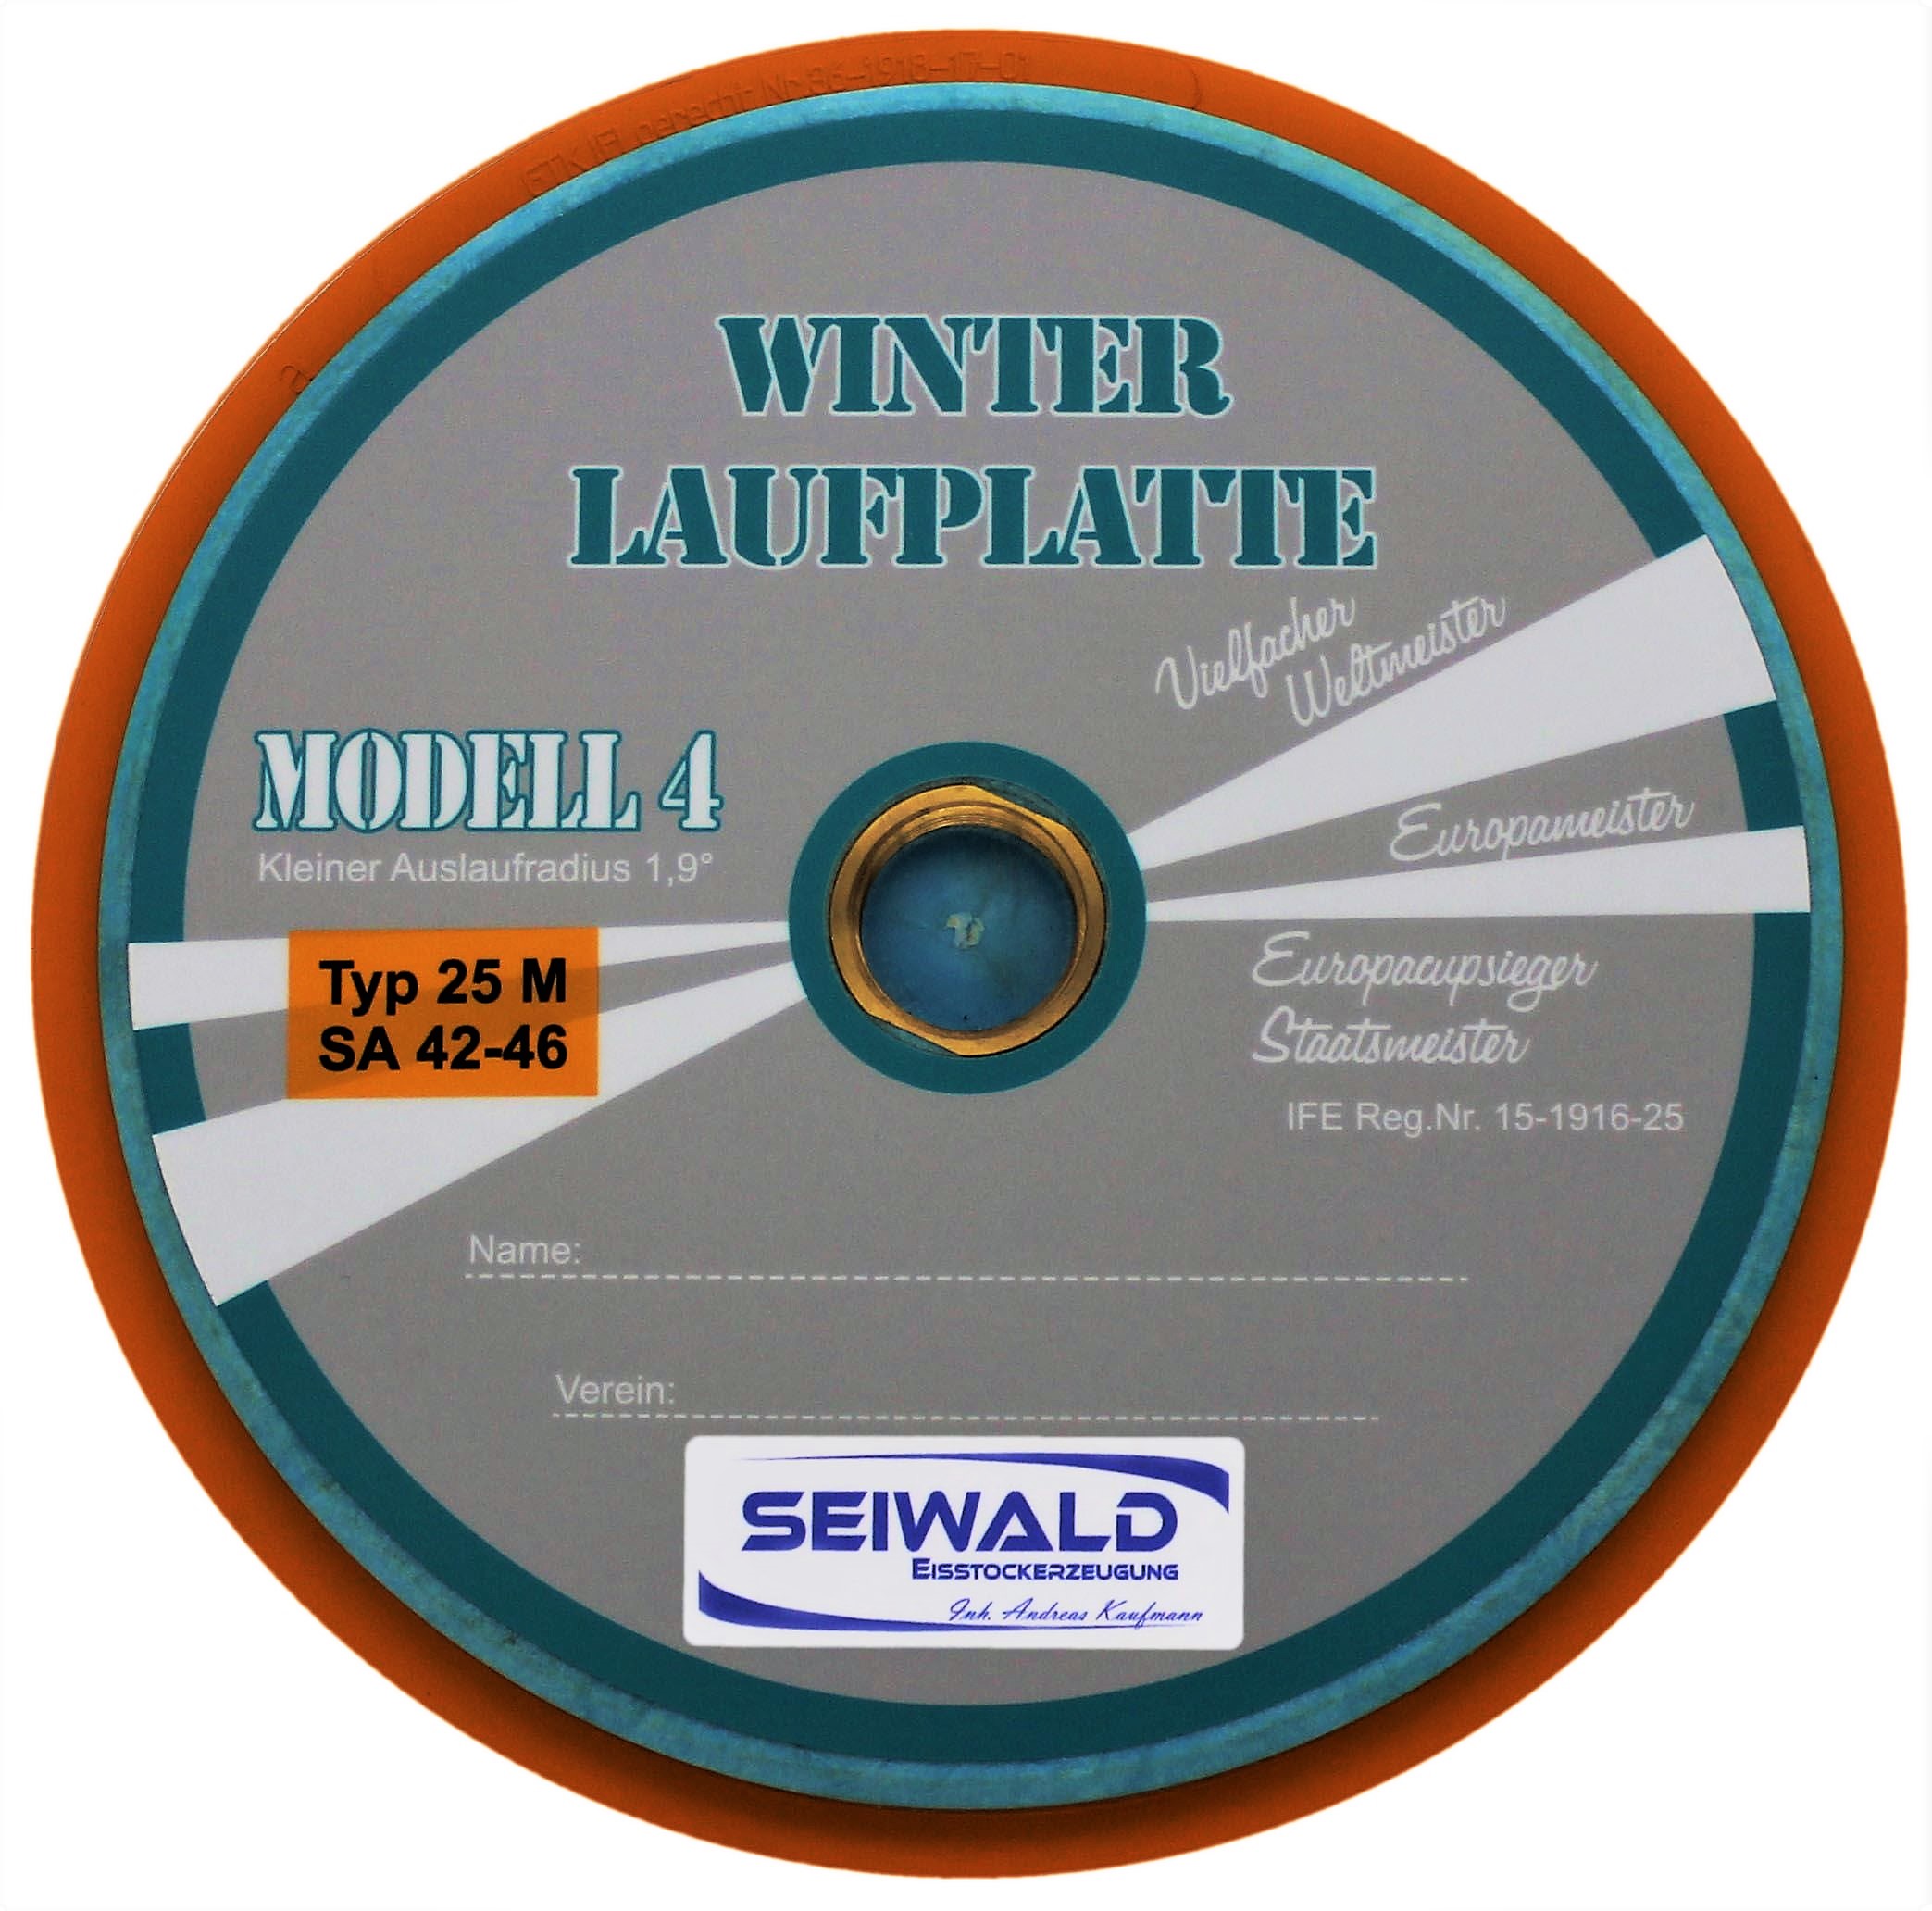 SEIWALD Modell 4 Winterlaufplatte / Langsame Kippplatte